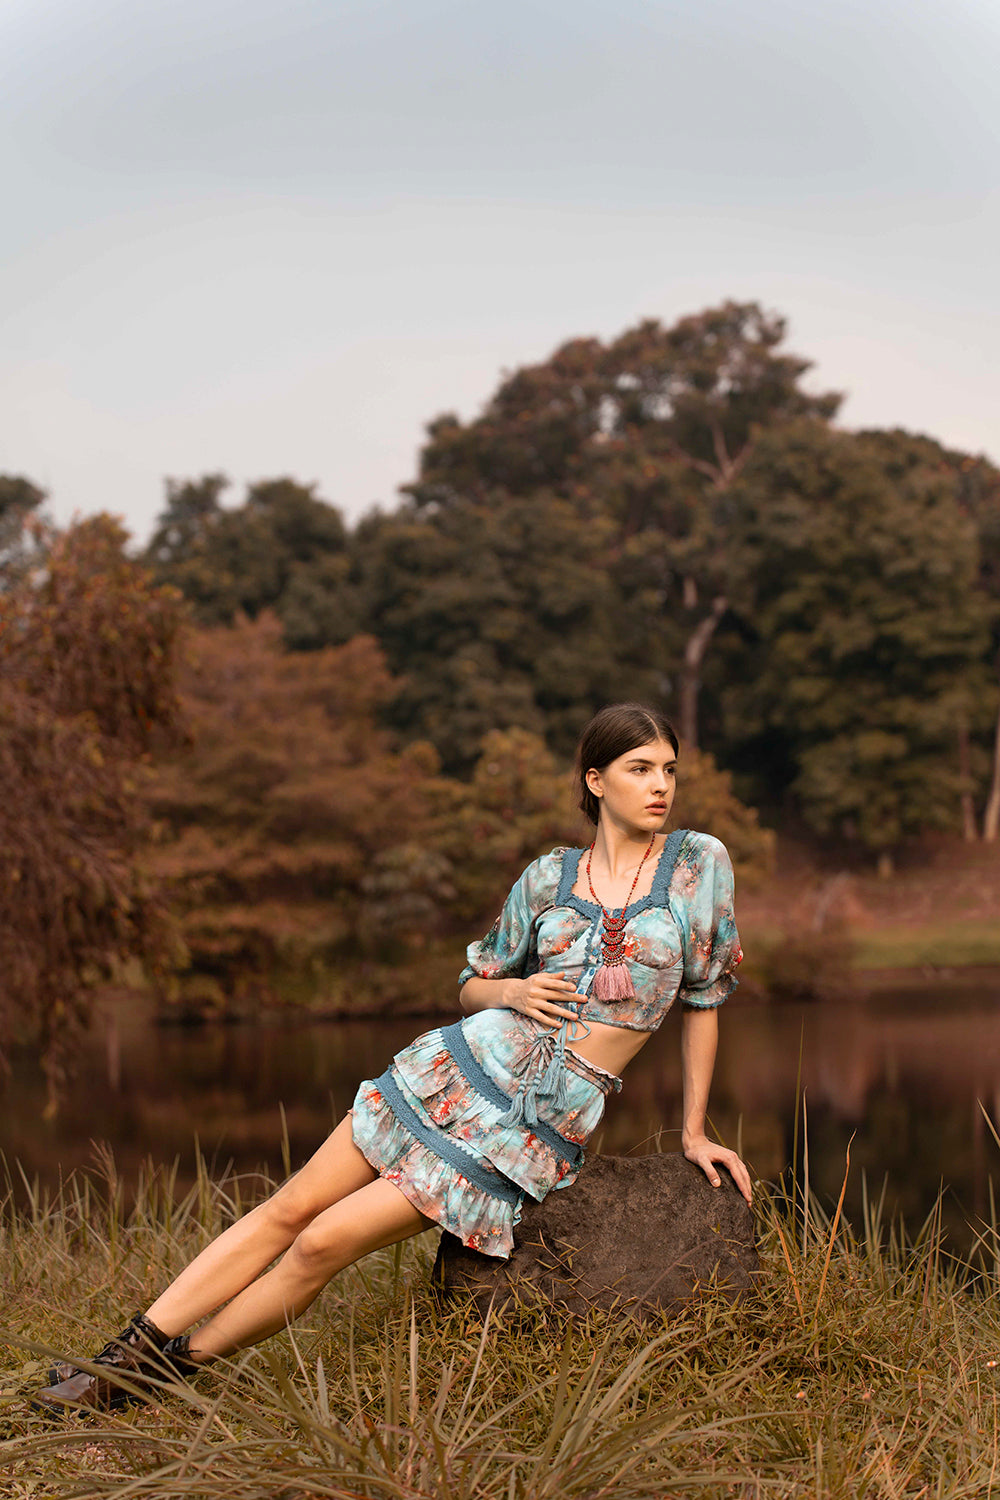 Aveline Mini Skirt, where sustainability meets bohemian allure, creating timeless fashion